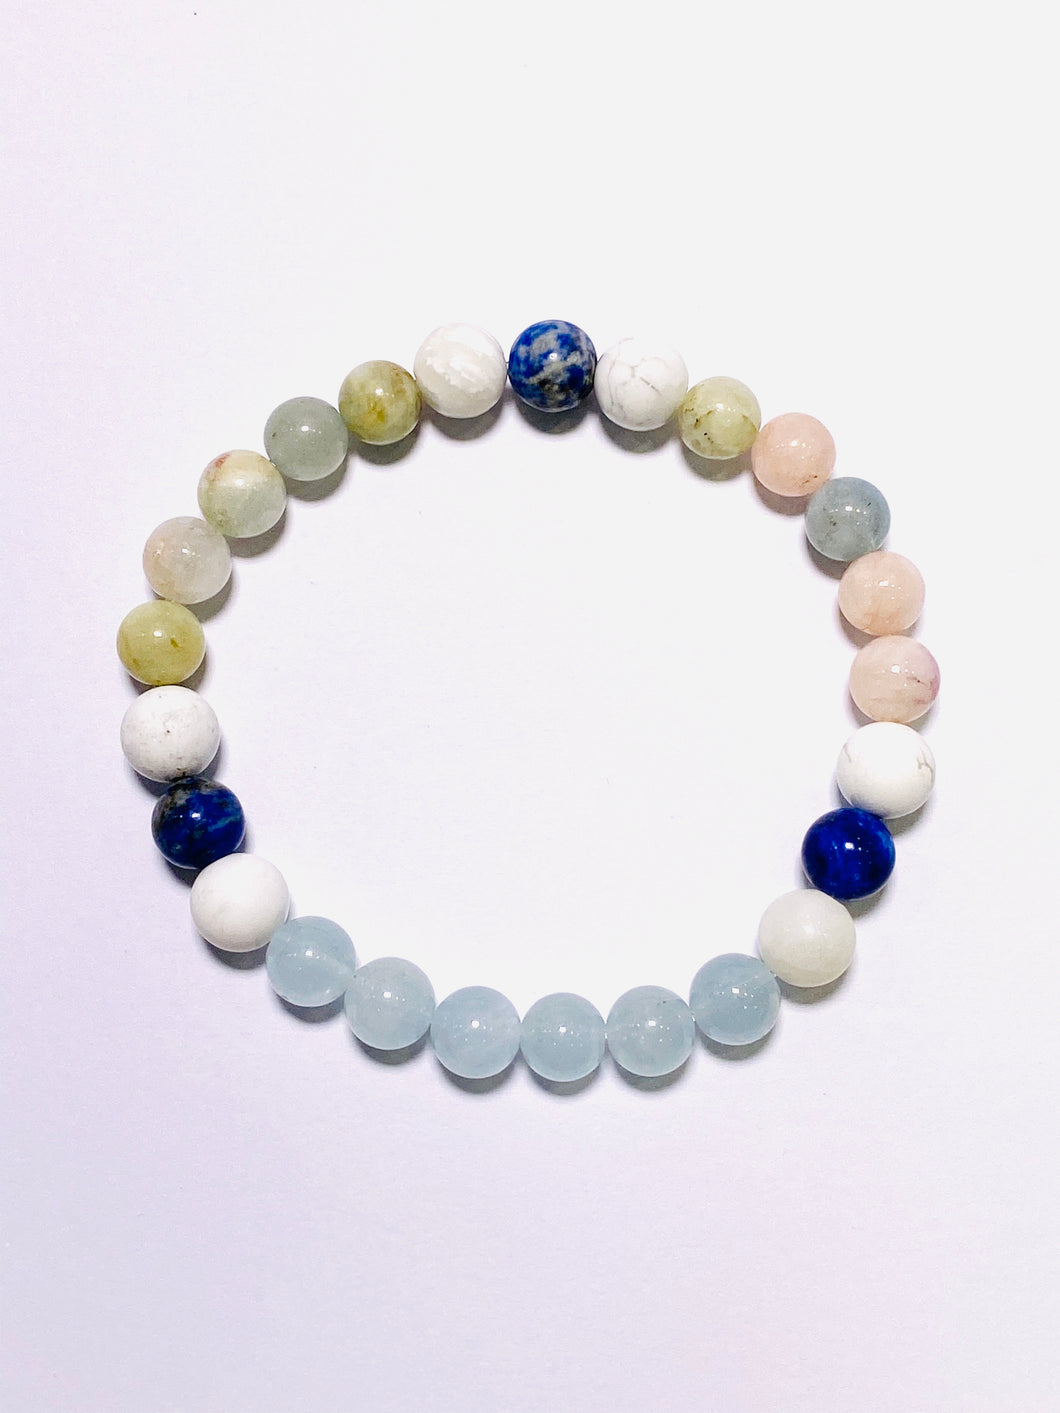 clarity-aquamarine-morganite-lapizlazuli-gemstone-bracelet